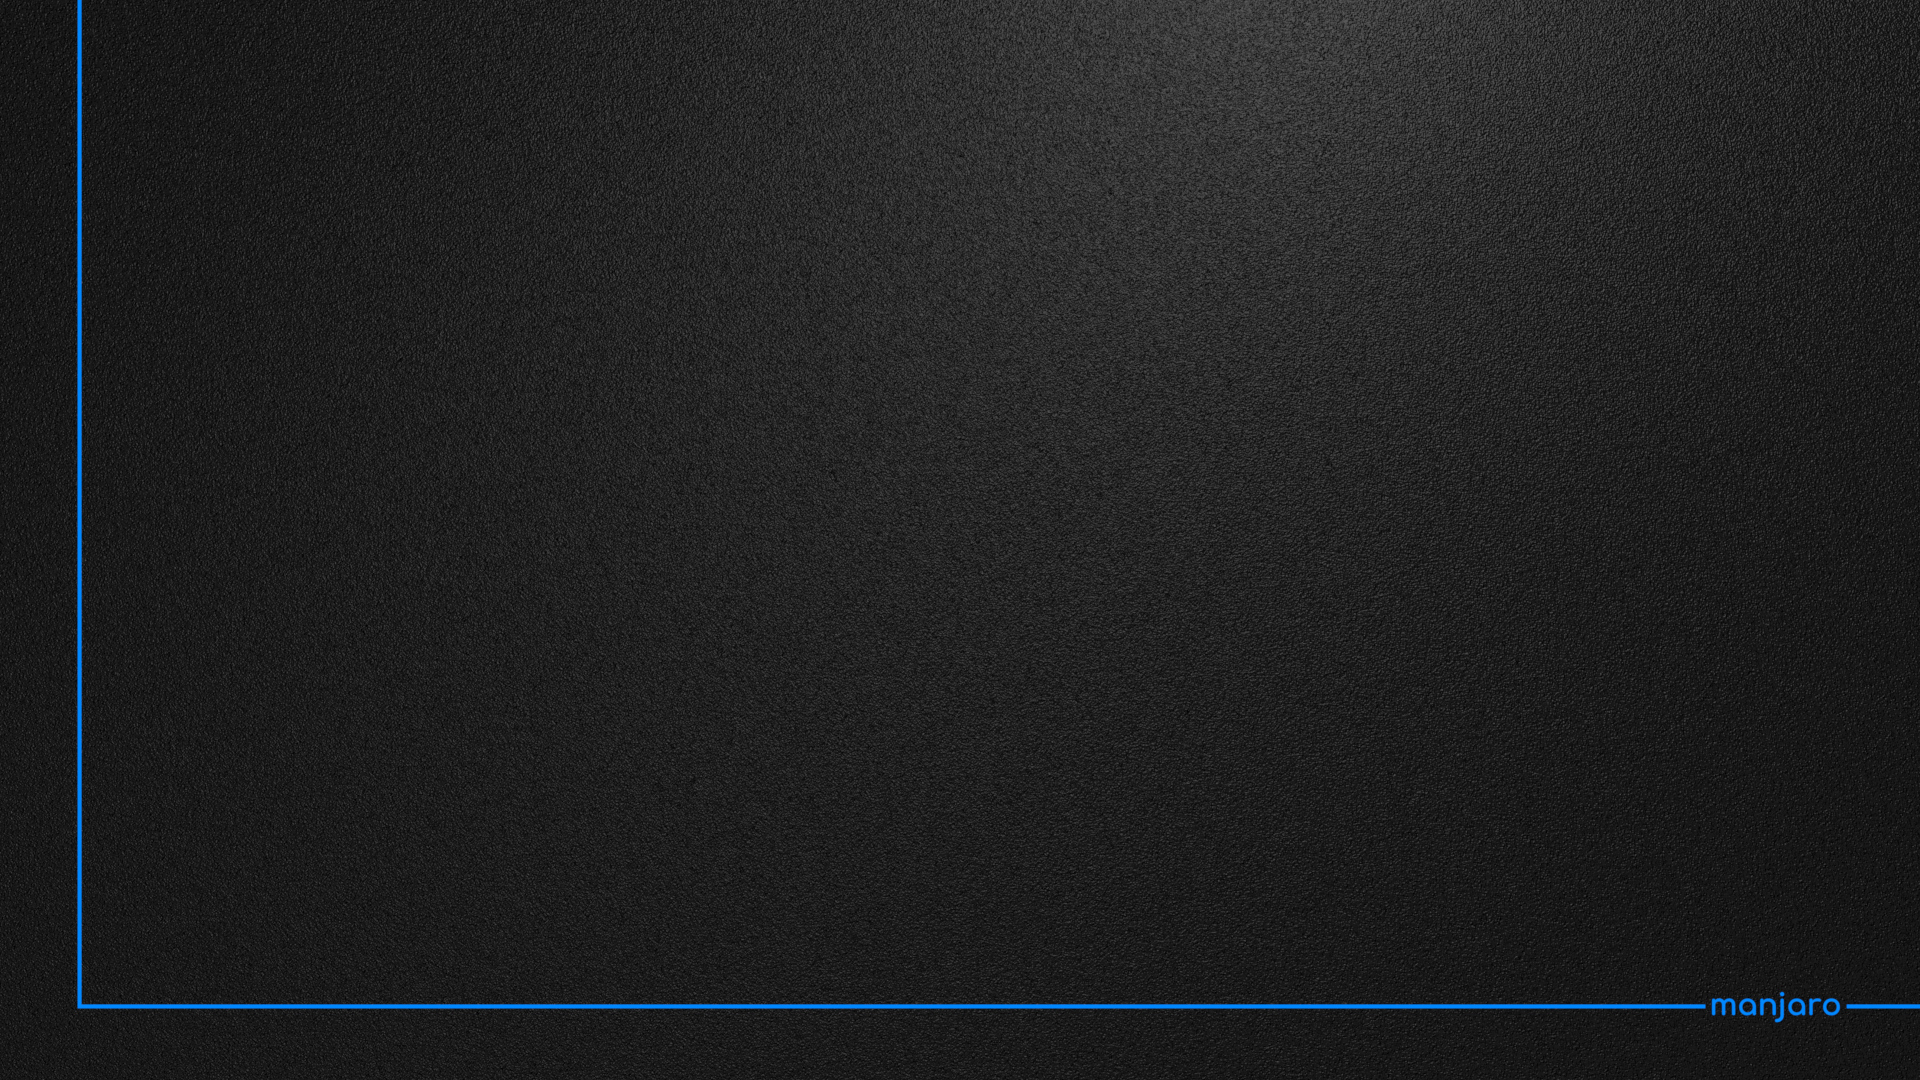 Manjaro Linux. Desktop wallpaper. 1920x1080